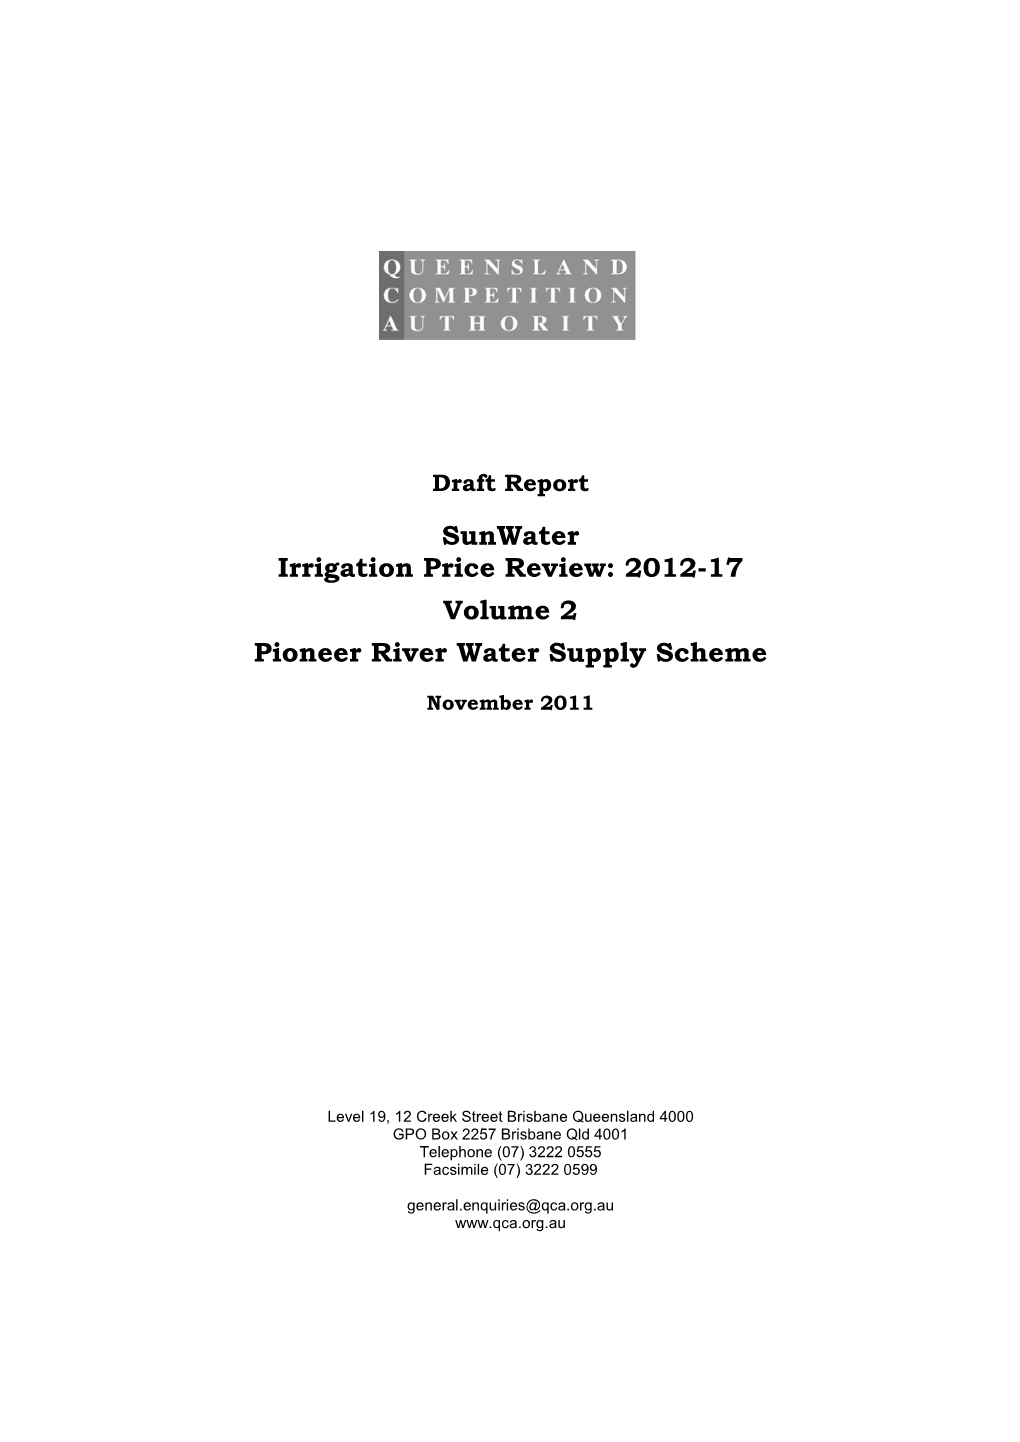 Sunwater Irrigation Price Review: 2012-17 Volume 2 Pioneer River Water Supply Scheme